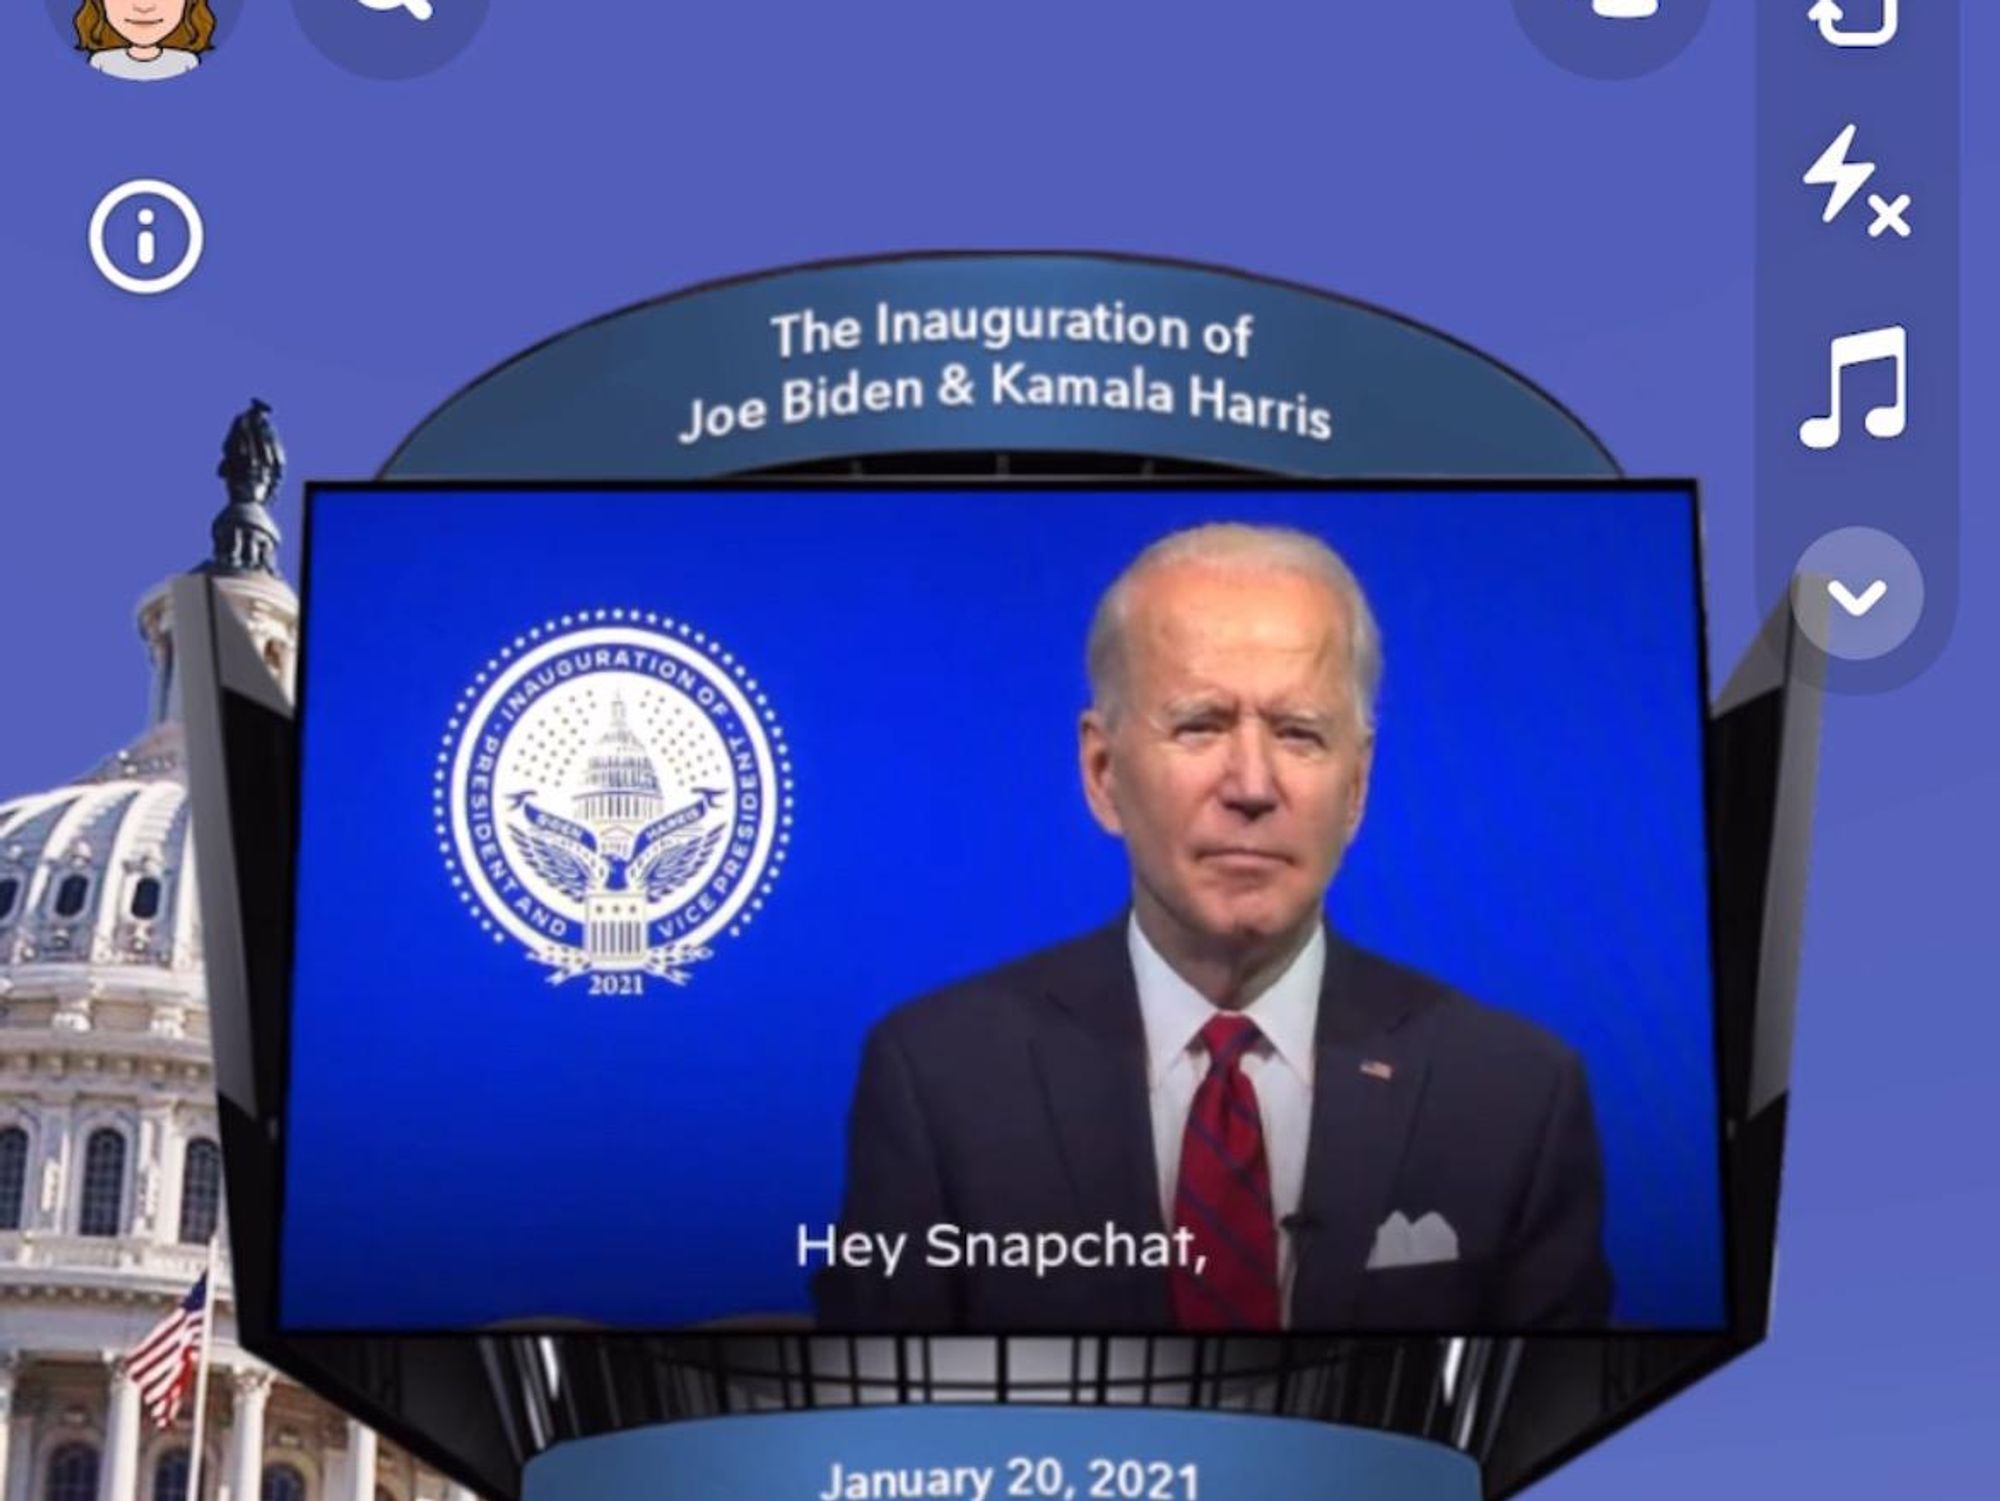 Snap Releases AR Lens for Biden's Inauguration